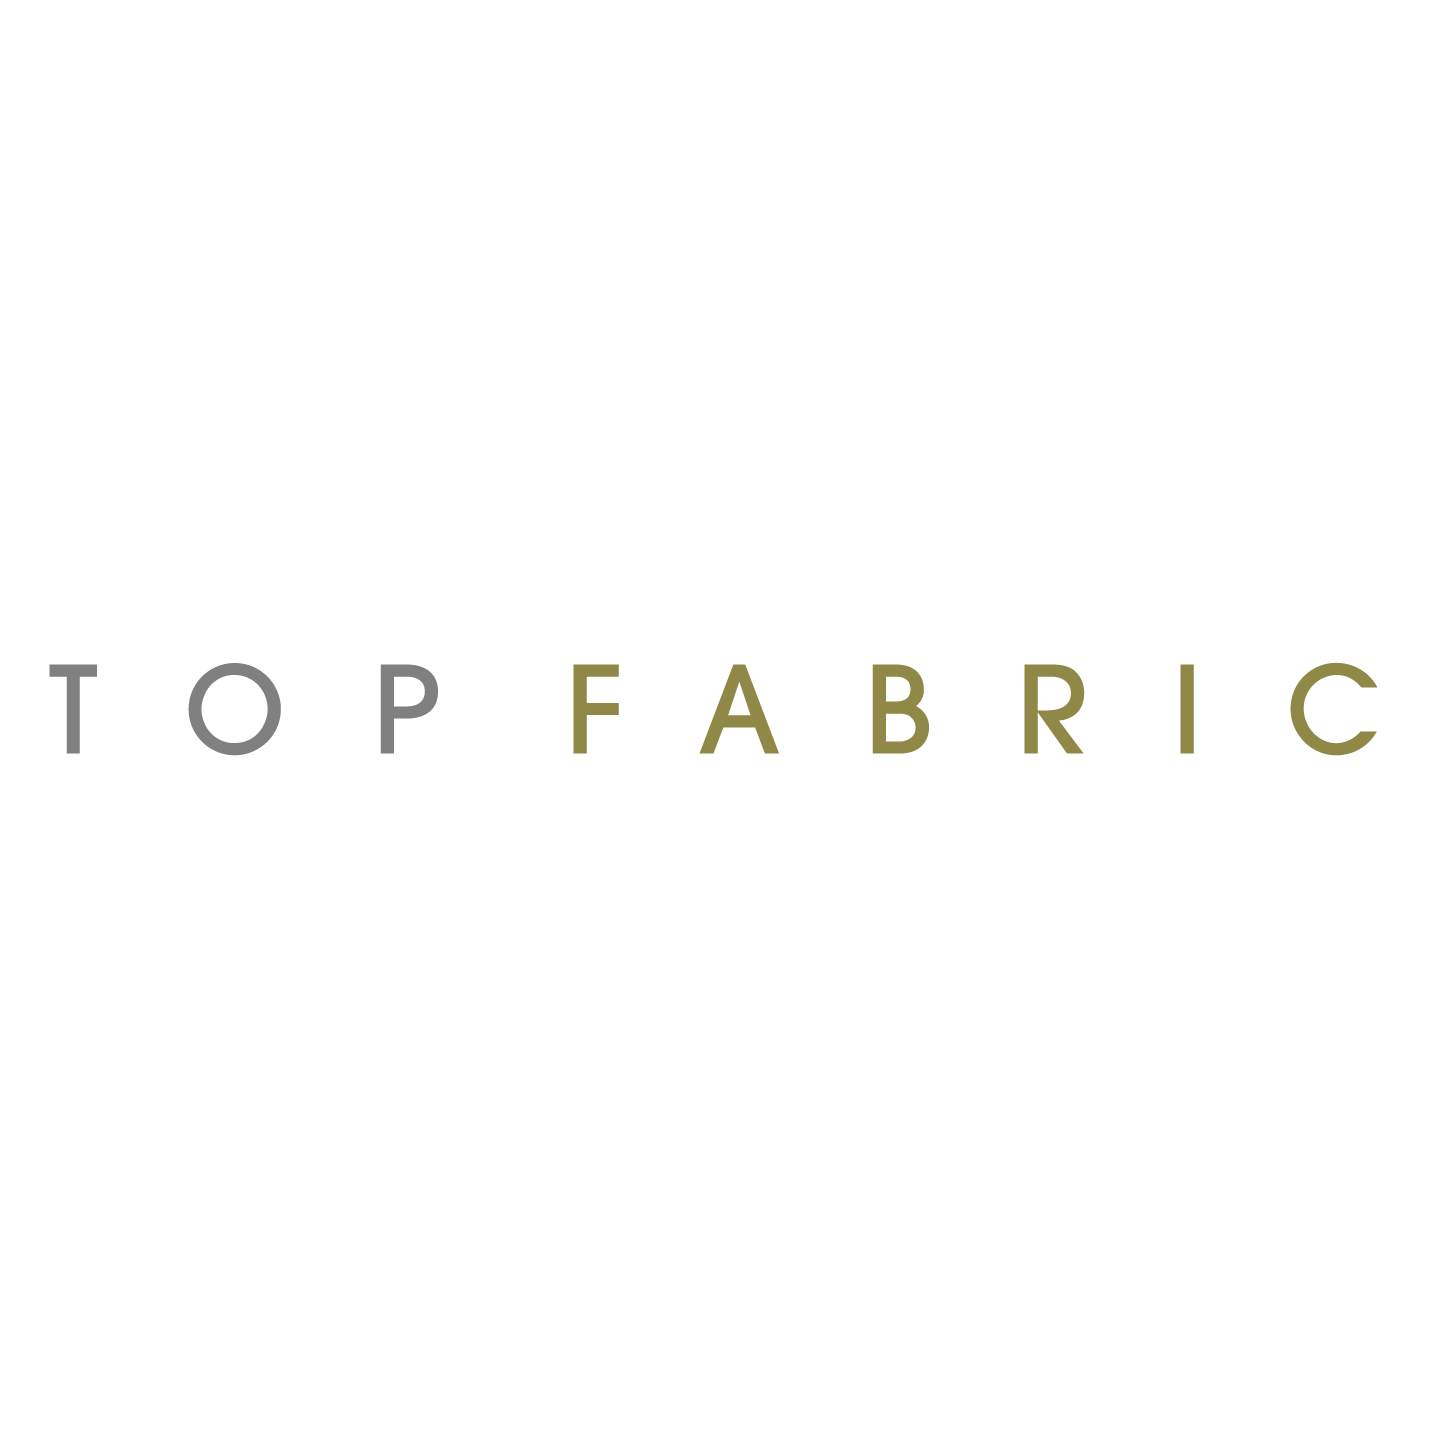 Buy fabric online - black, silk, viscose, velvet - fabric samples  available. Worldwide shipping